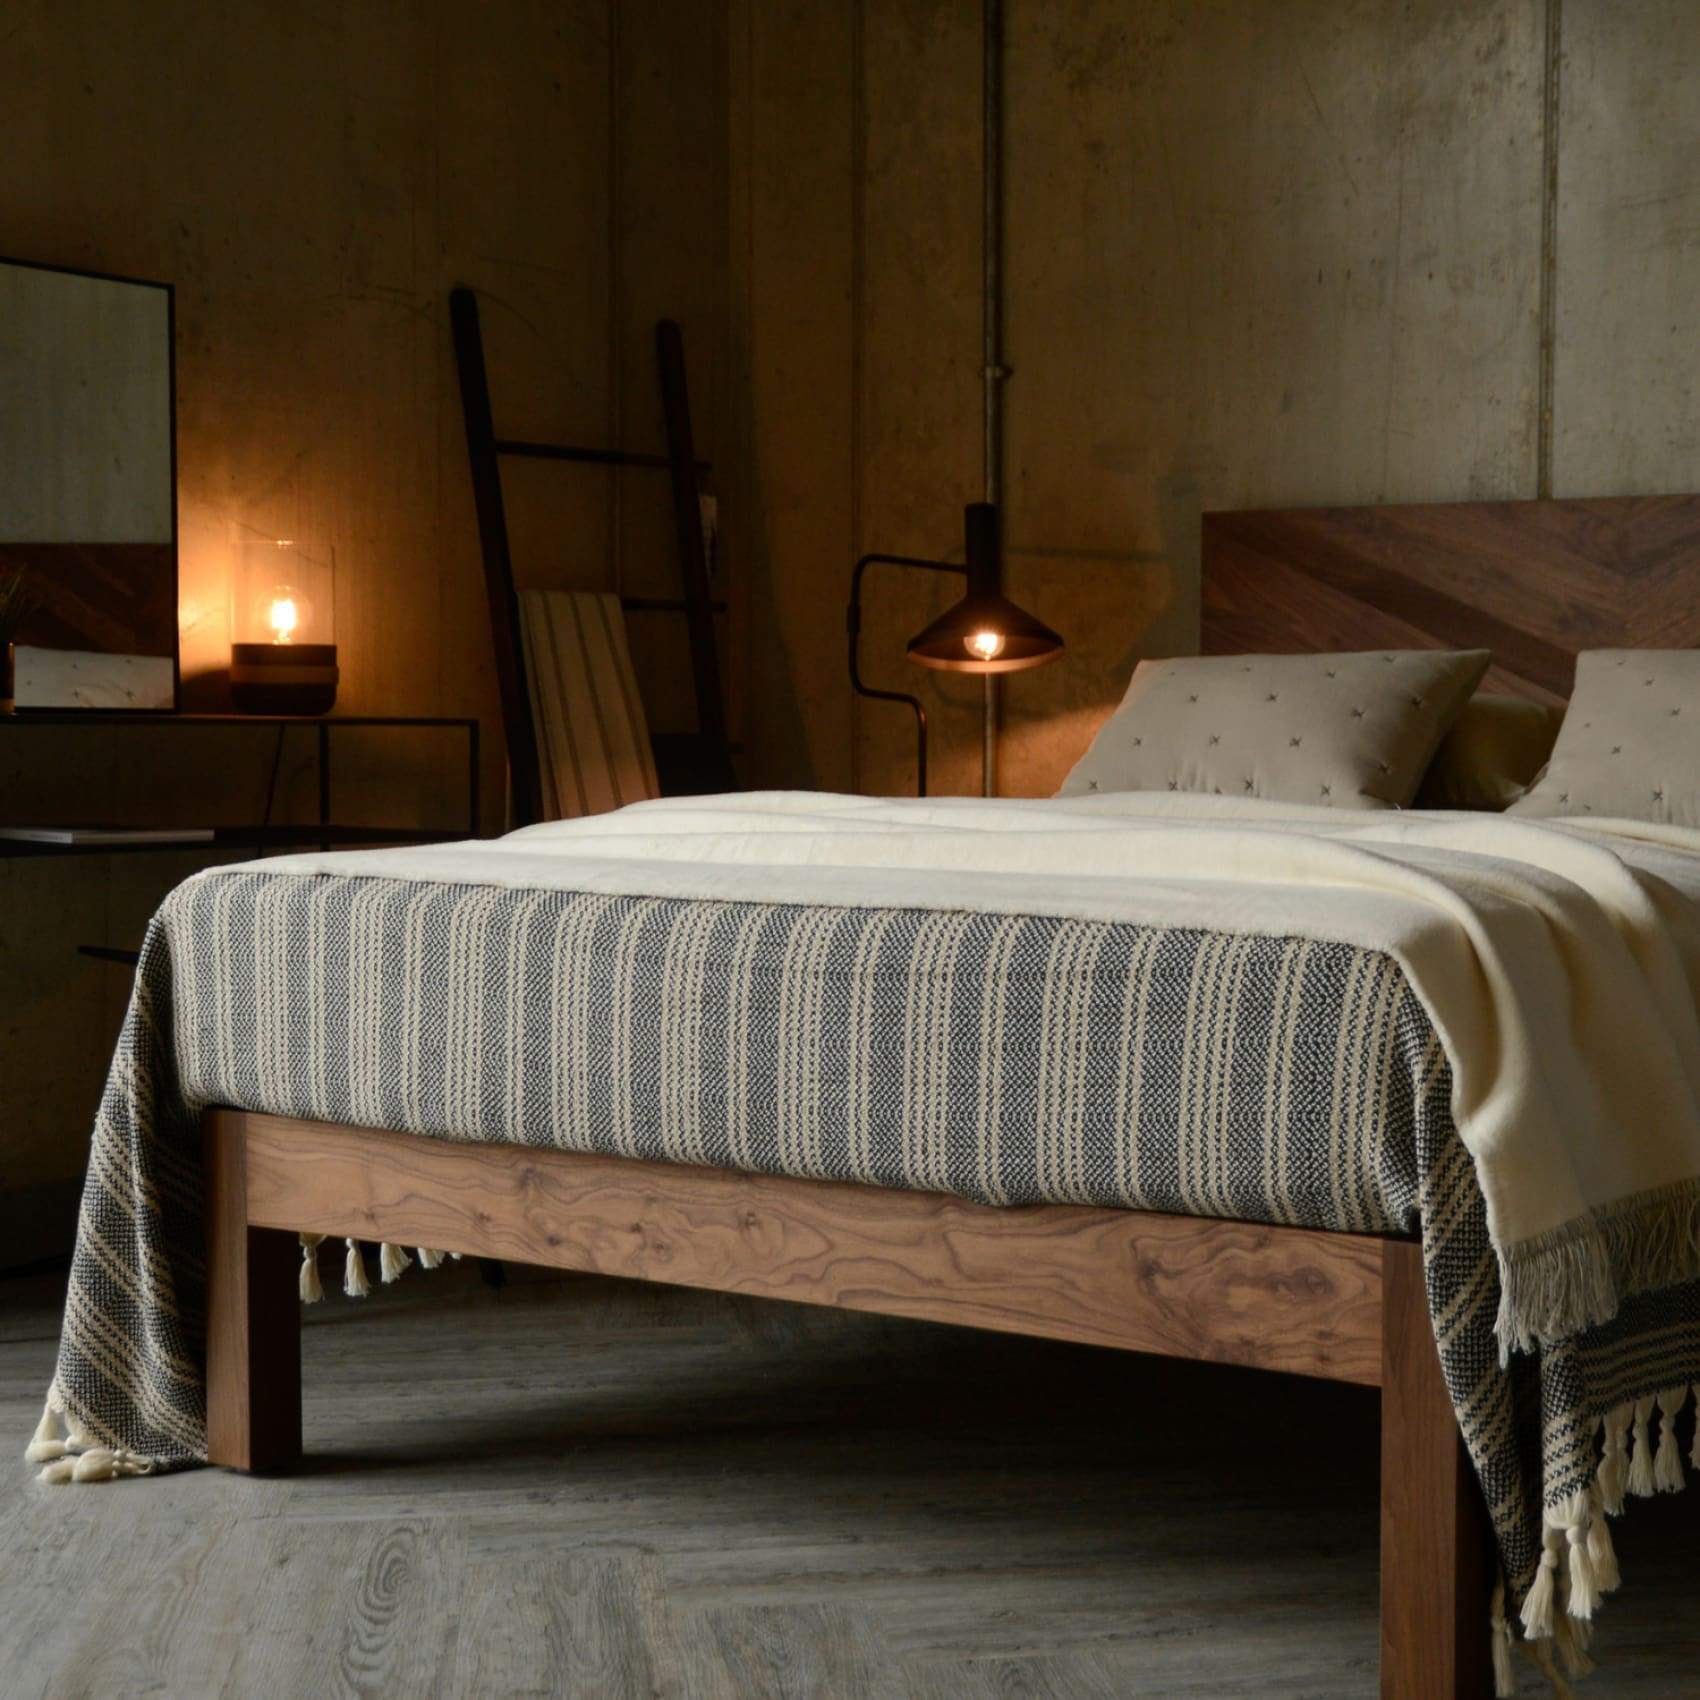 hilmi-artisan-cotton-blanket-bedroom-black-living-room-luks-linen-furniture-comfort-wood-878.jpg